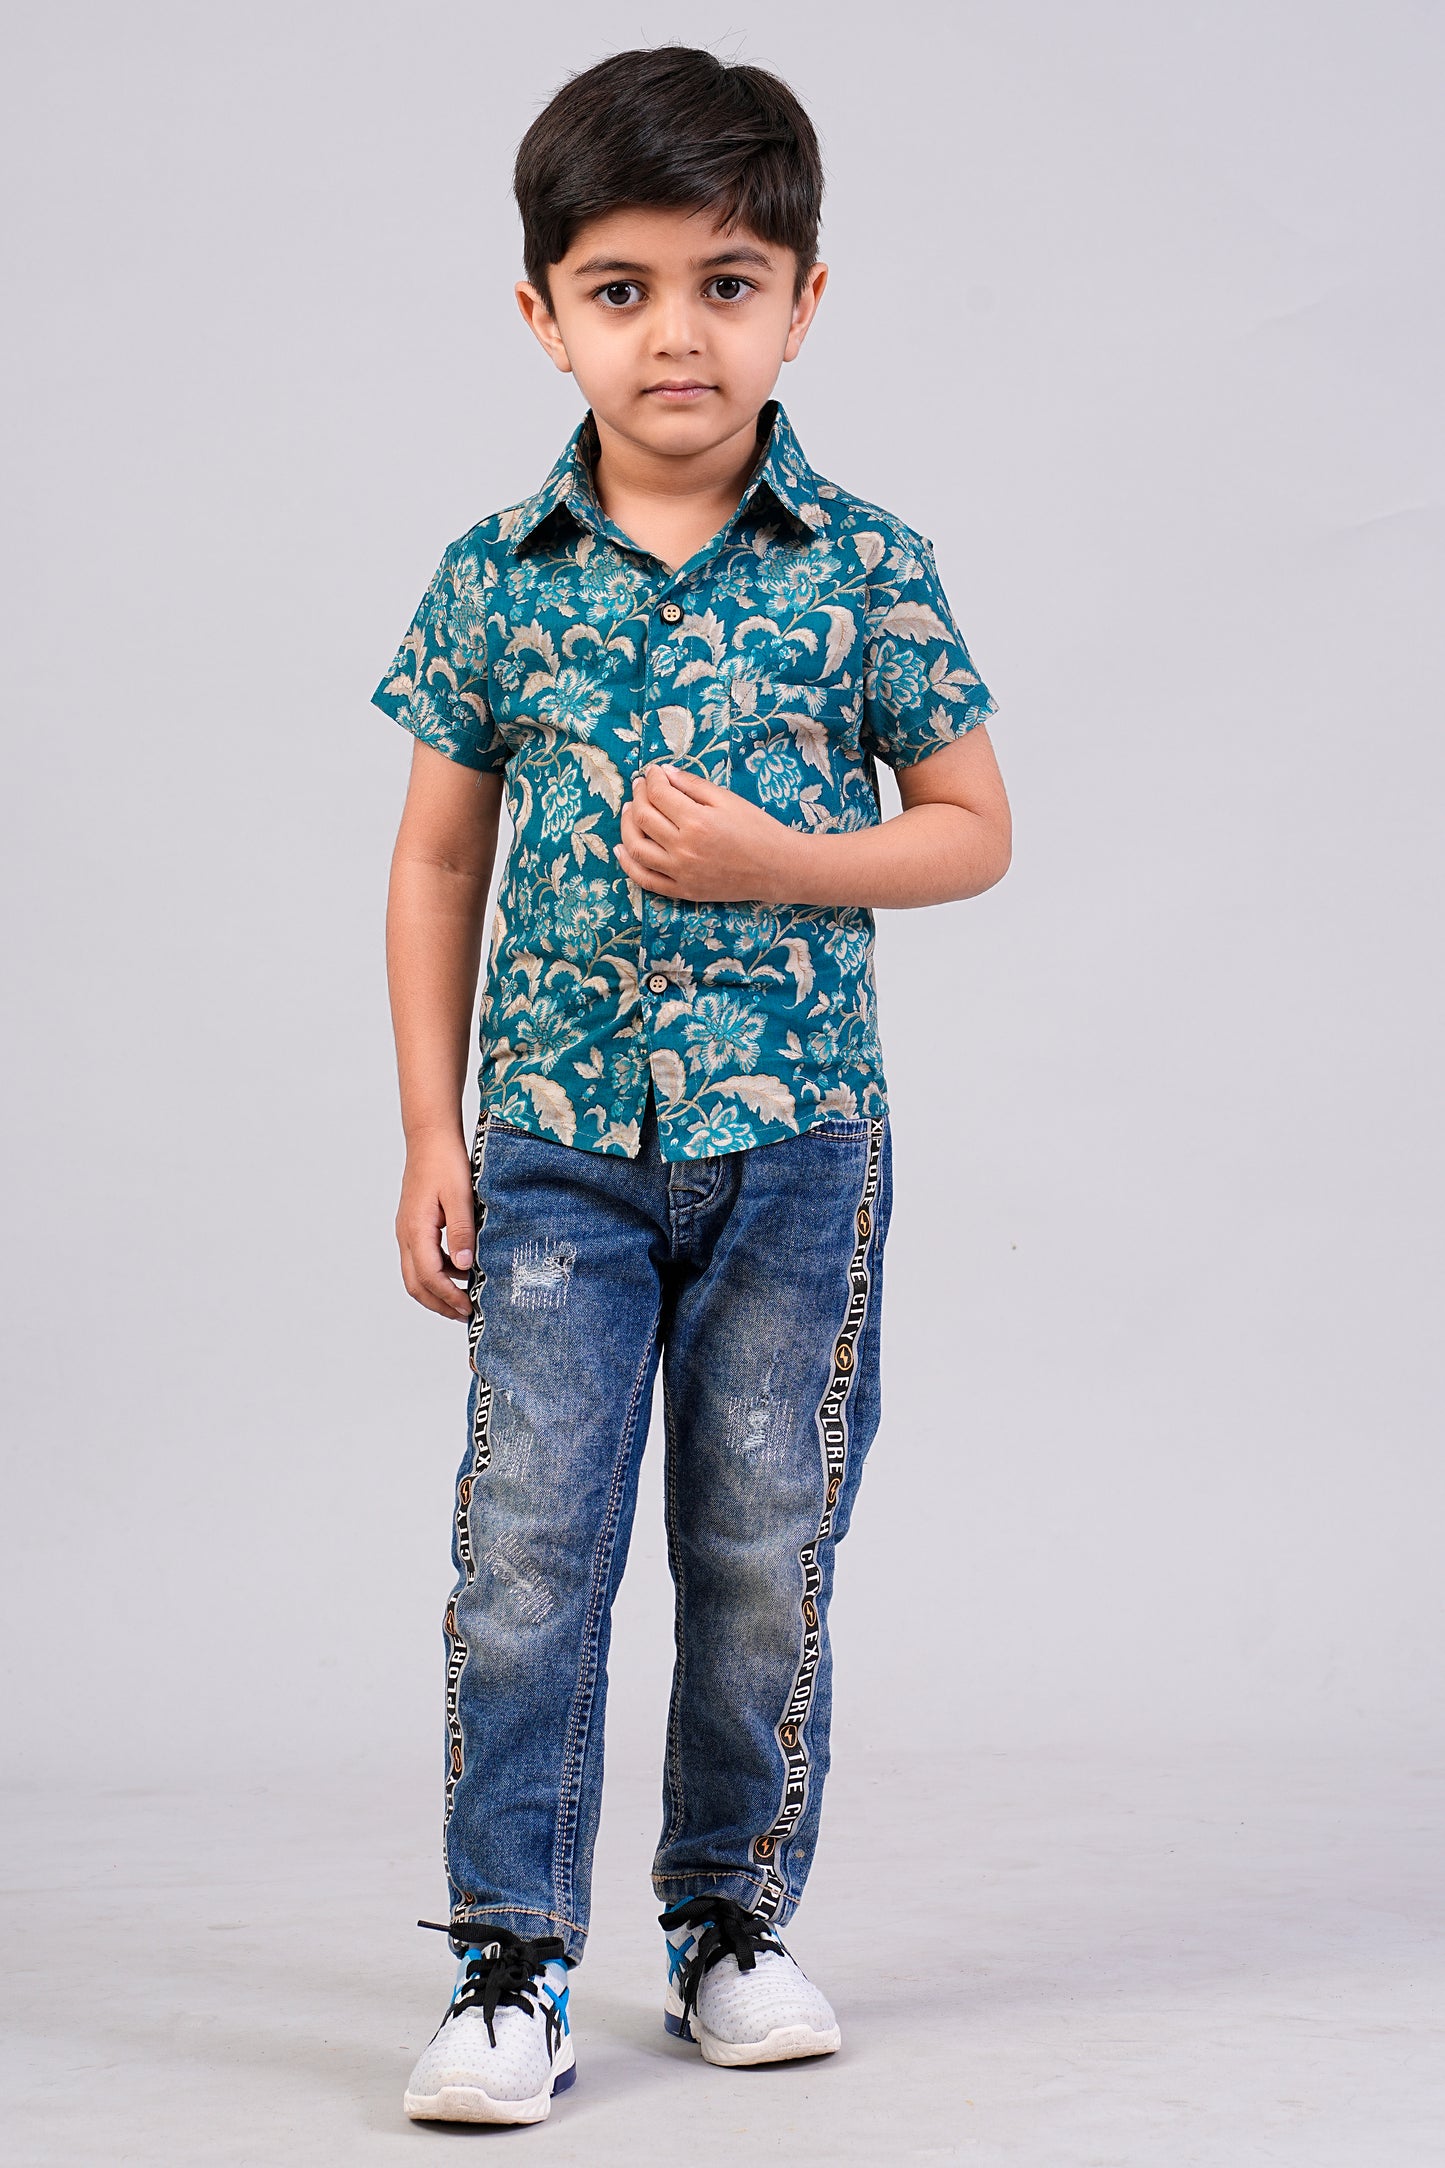 Boy's Floral Printed Half-Sleeves Shirts